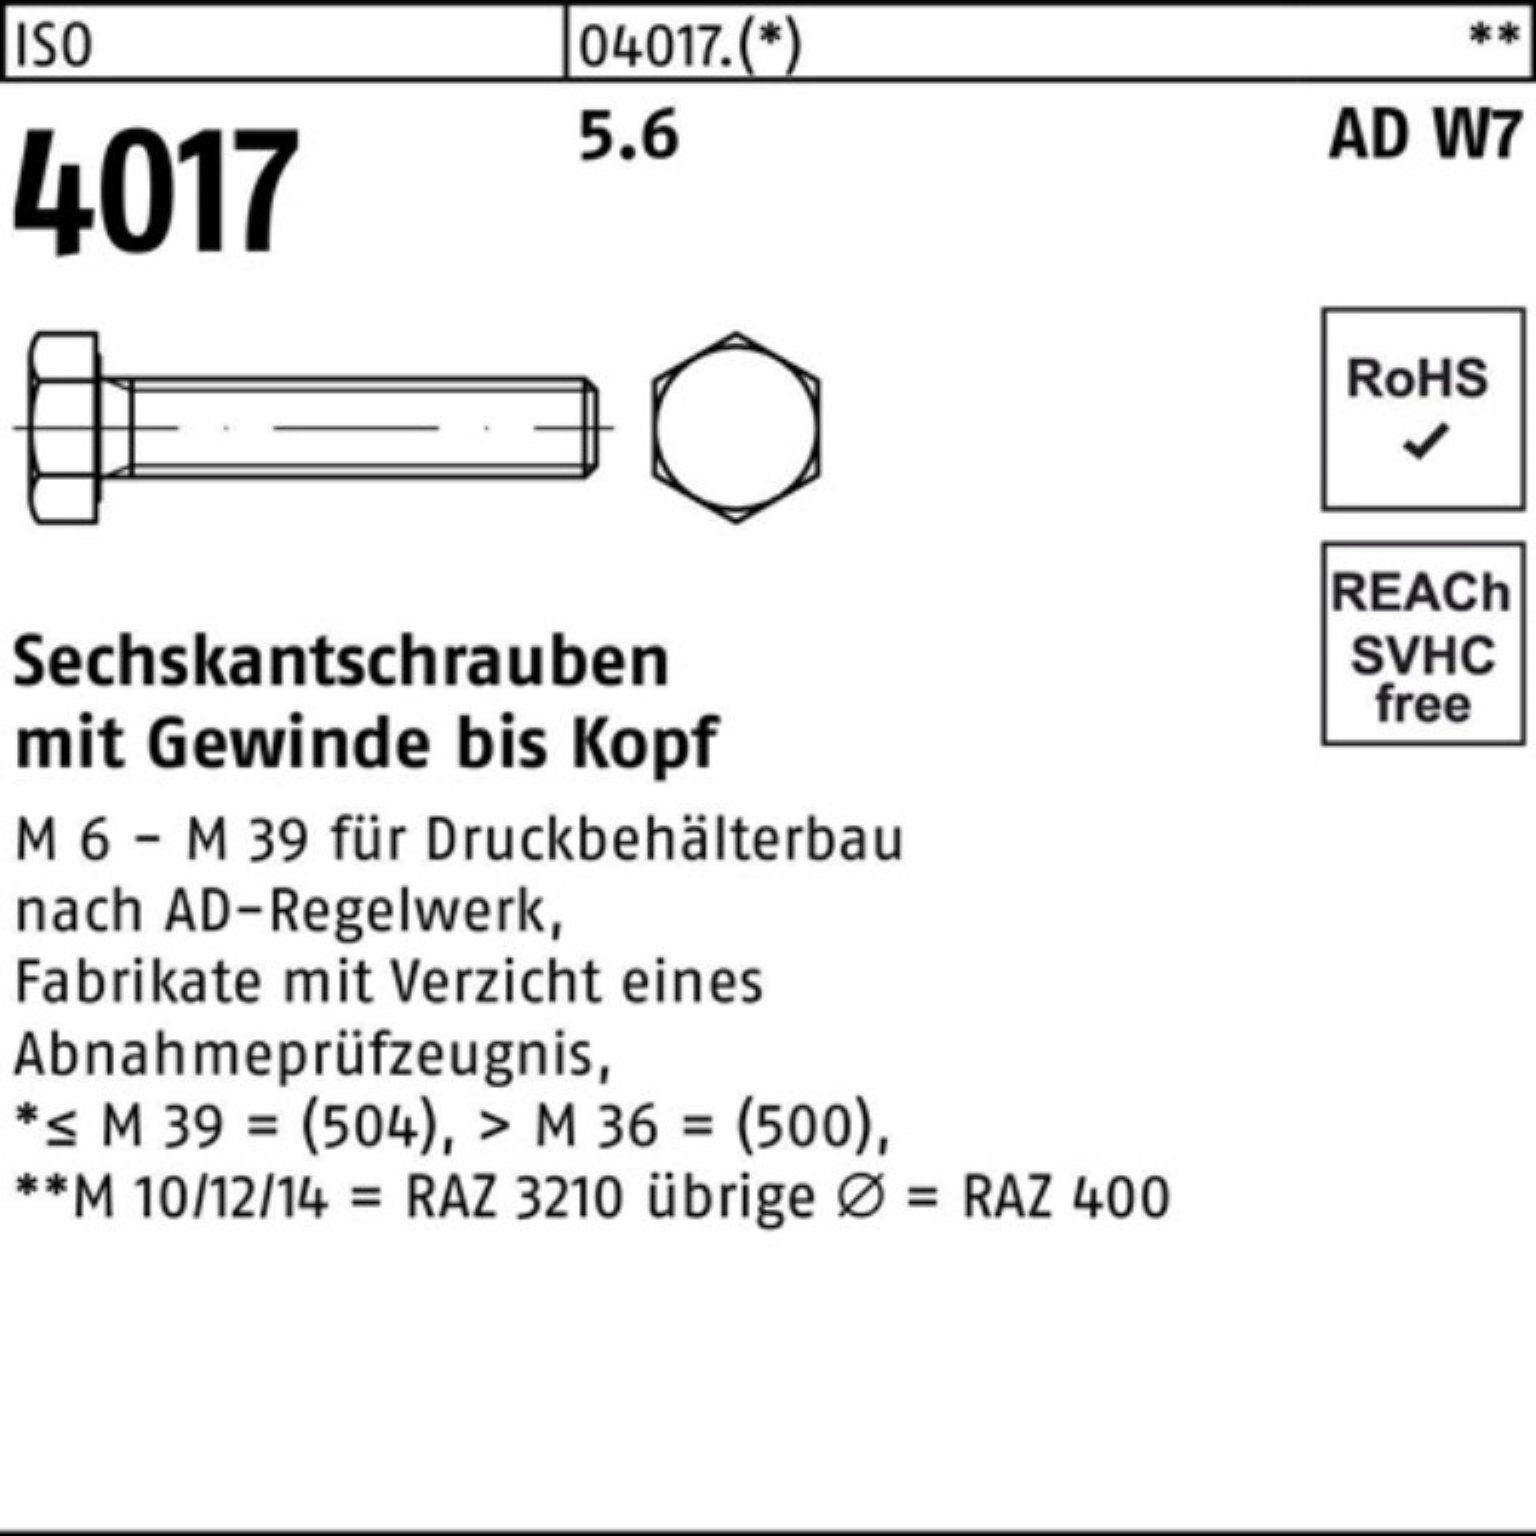 Bufab Sechskantschraube M12x 4017 100er 50 VG W7 Pack AD I 80 Stück Sechskantschraube ISO 5.6